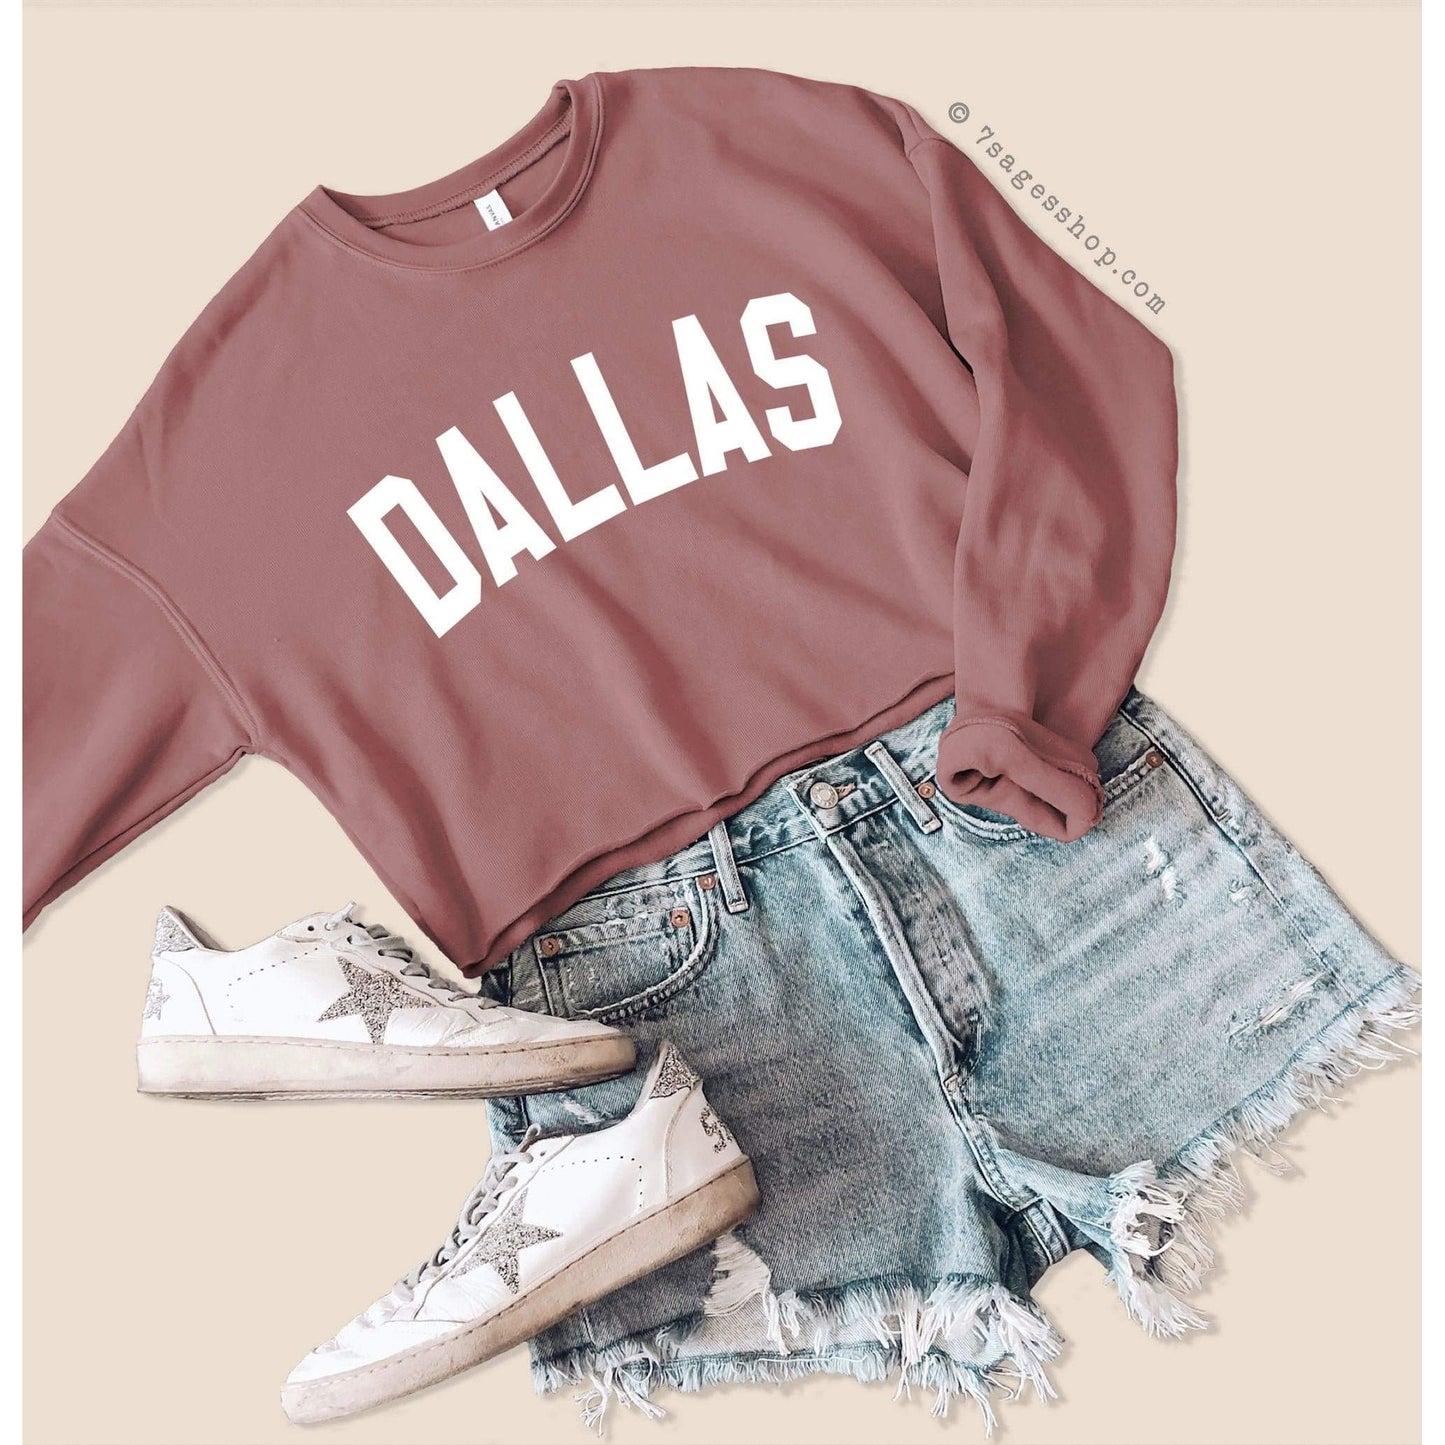 Dallas Texas Sweatshirt - Dallas Cropped Sweatshirt - Dallas Shirts - Texas Shirt - Fleece Sweater - Texas Cropped Sweater